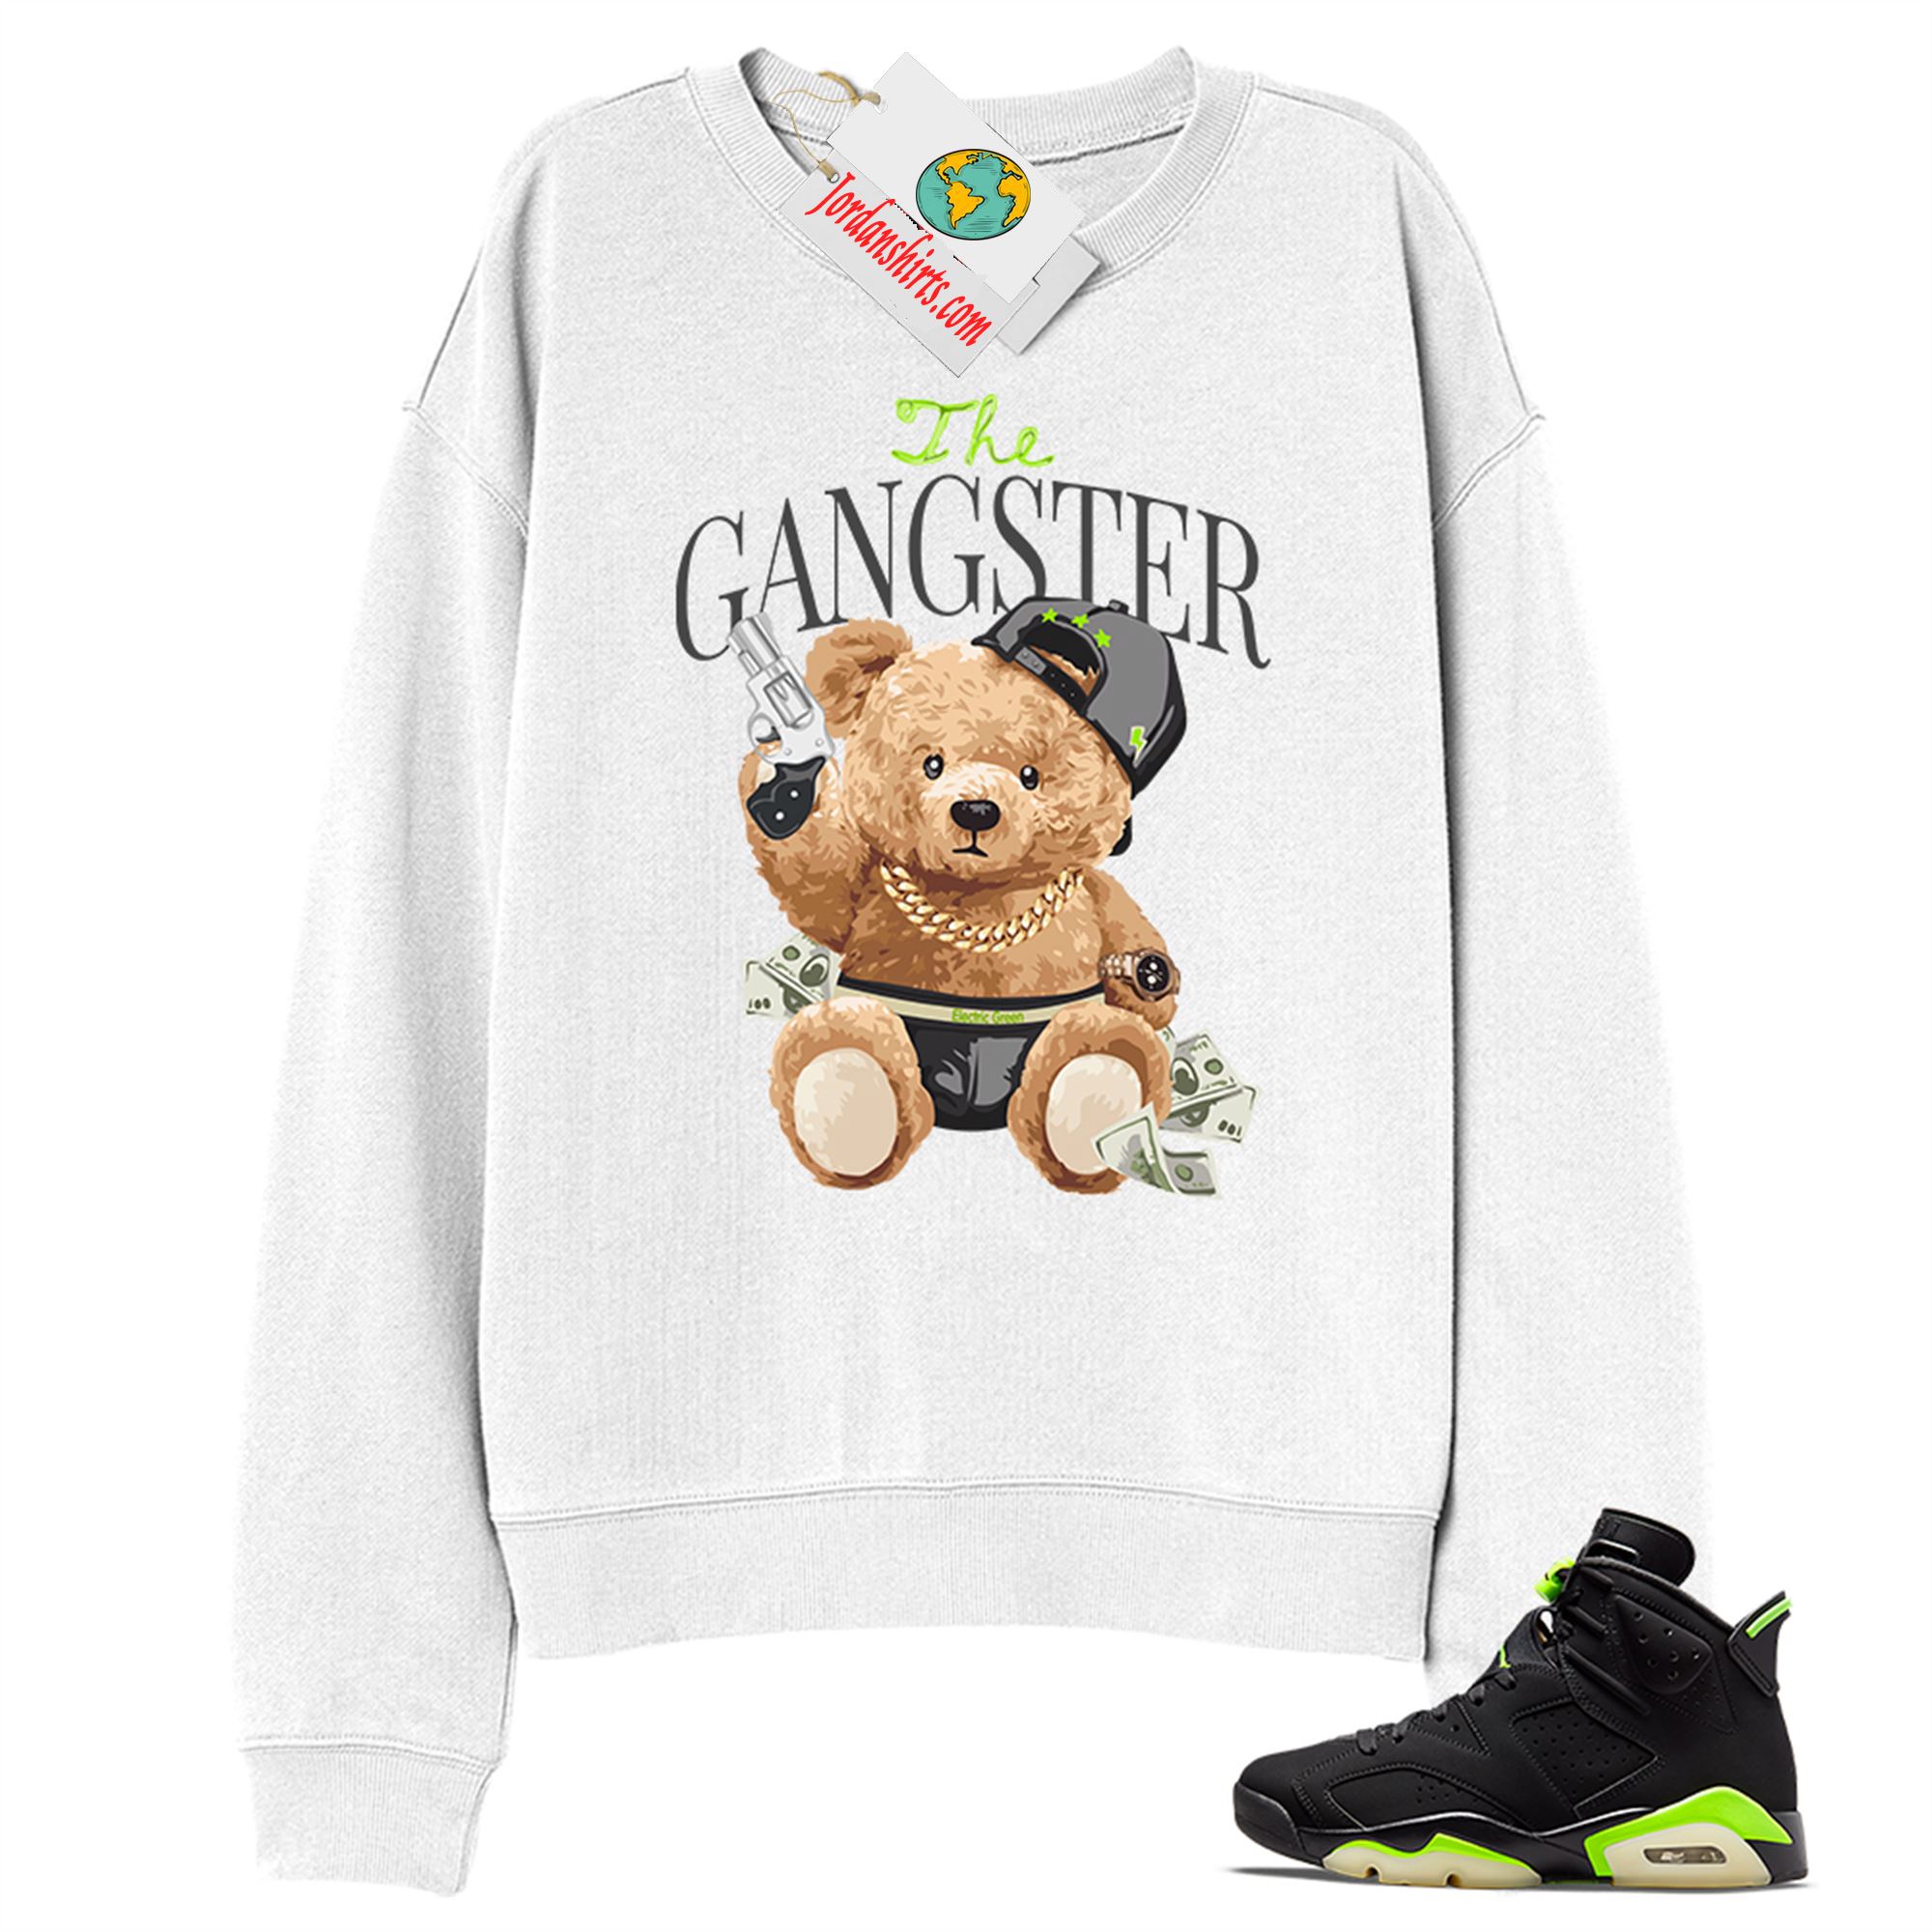 Jordan 6 Sweatshirt, Teddy Bear The Gangster White Sweatshirt Air Jordan 6 Electric Green 6s Size Up To 5xl